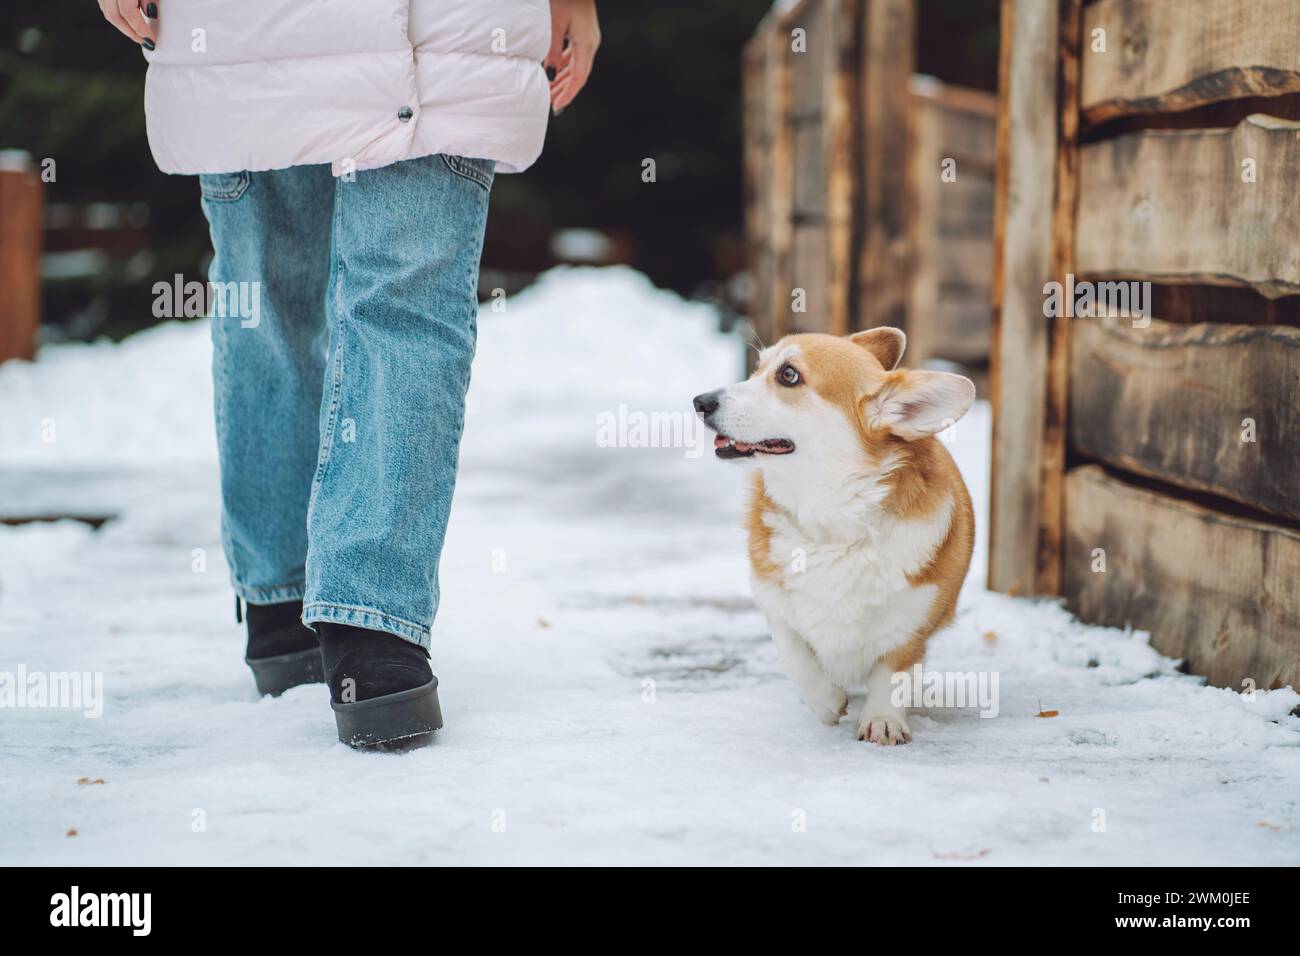 Corgi dog walking with owner on snow Stock Photo